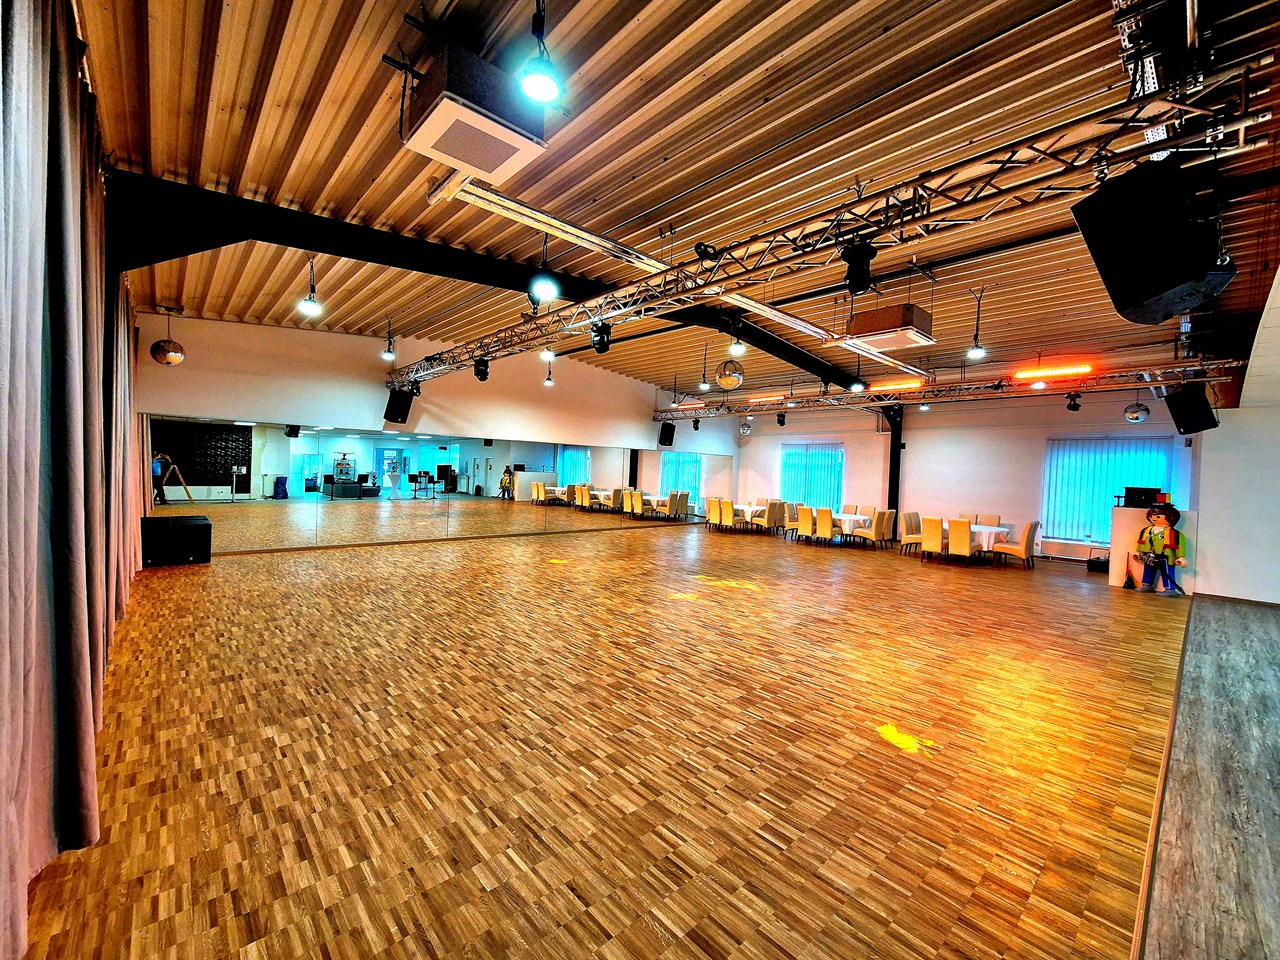 Eventlocation Forchheim Information about the banquet halls Dance hall